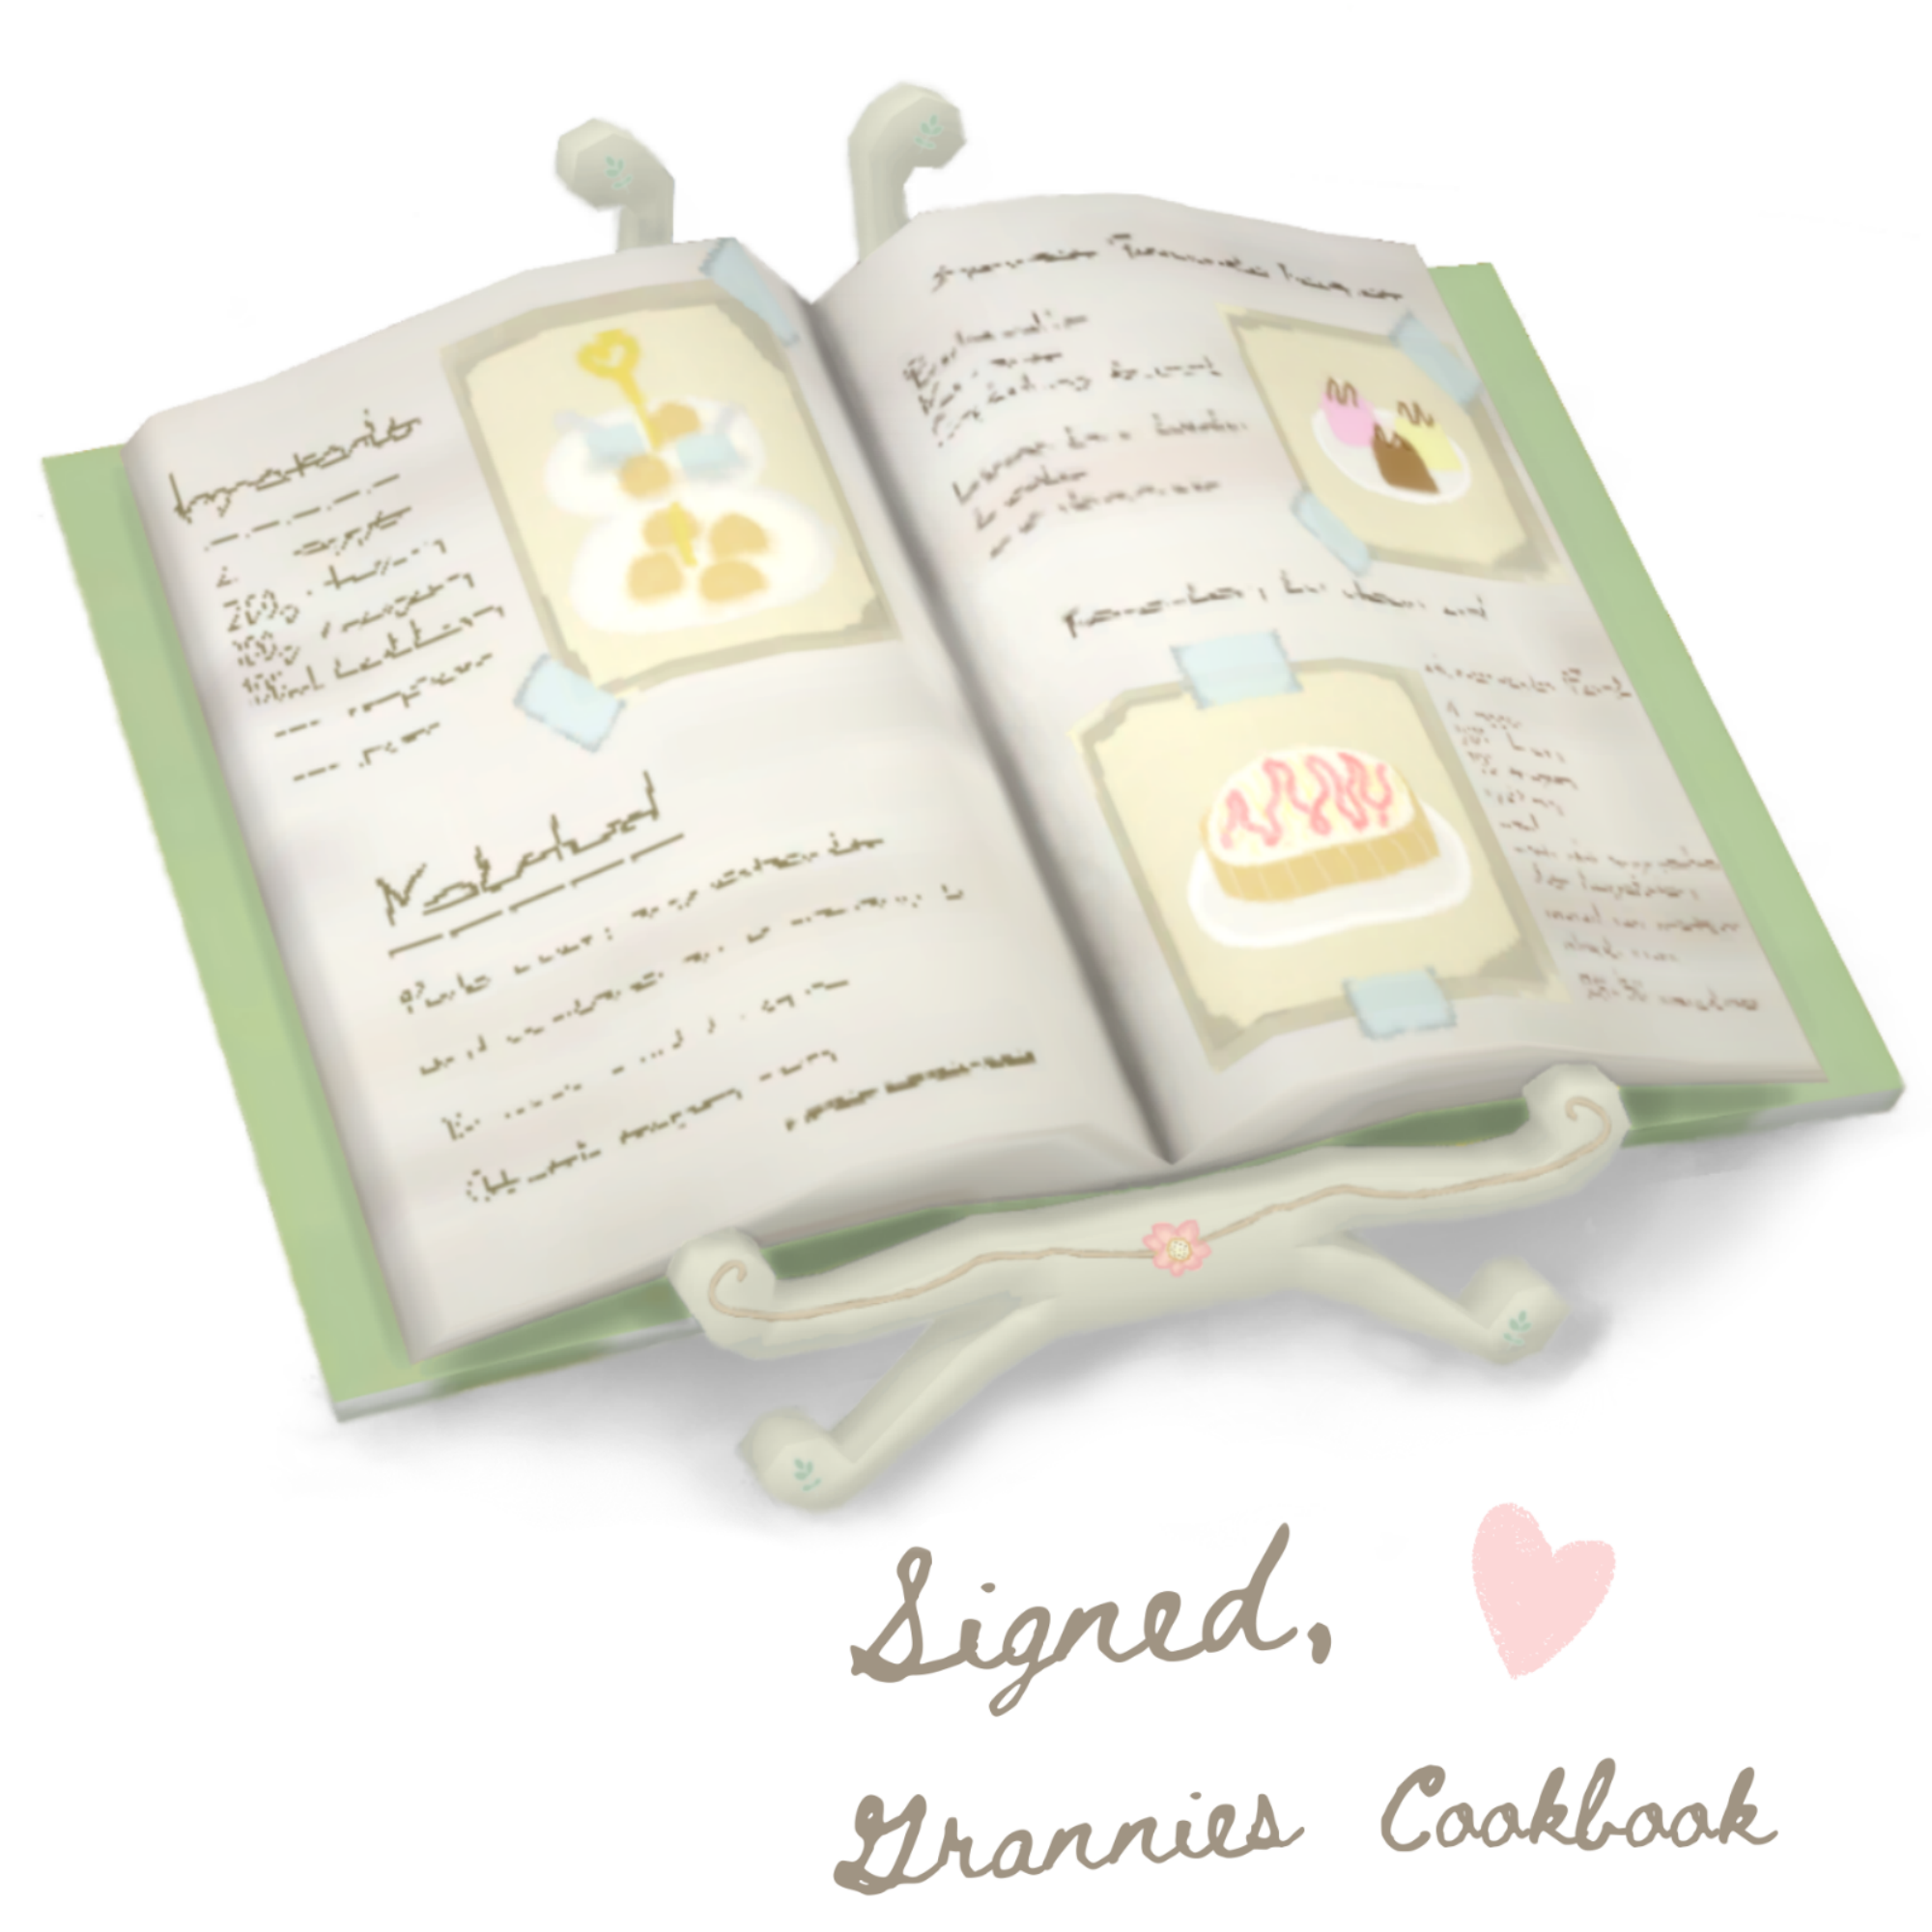 Grannies Cookbook (Food Enabler) project avatar